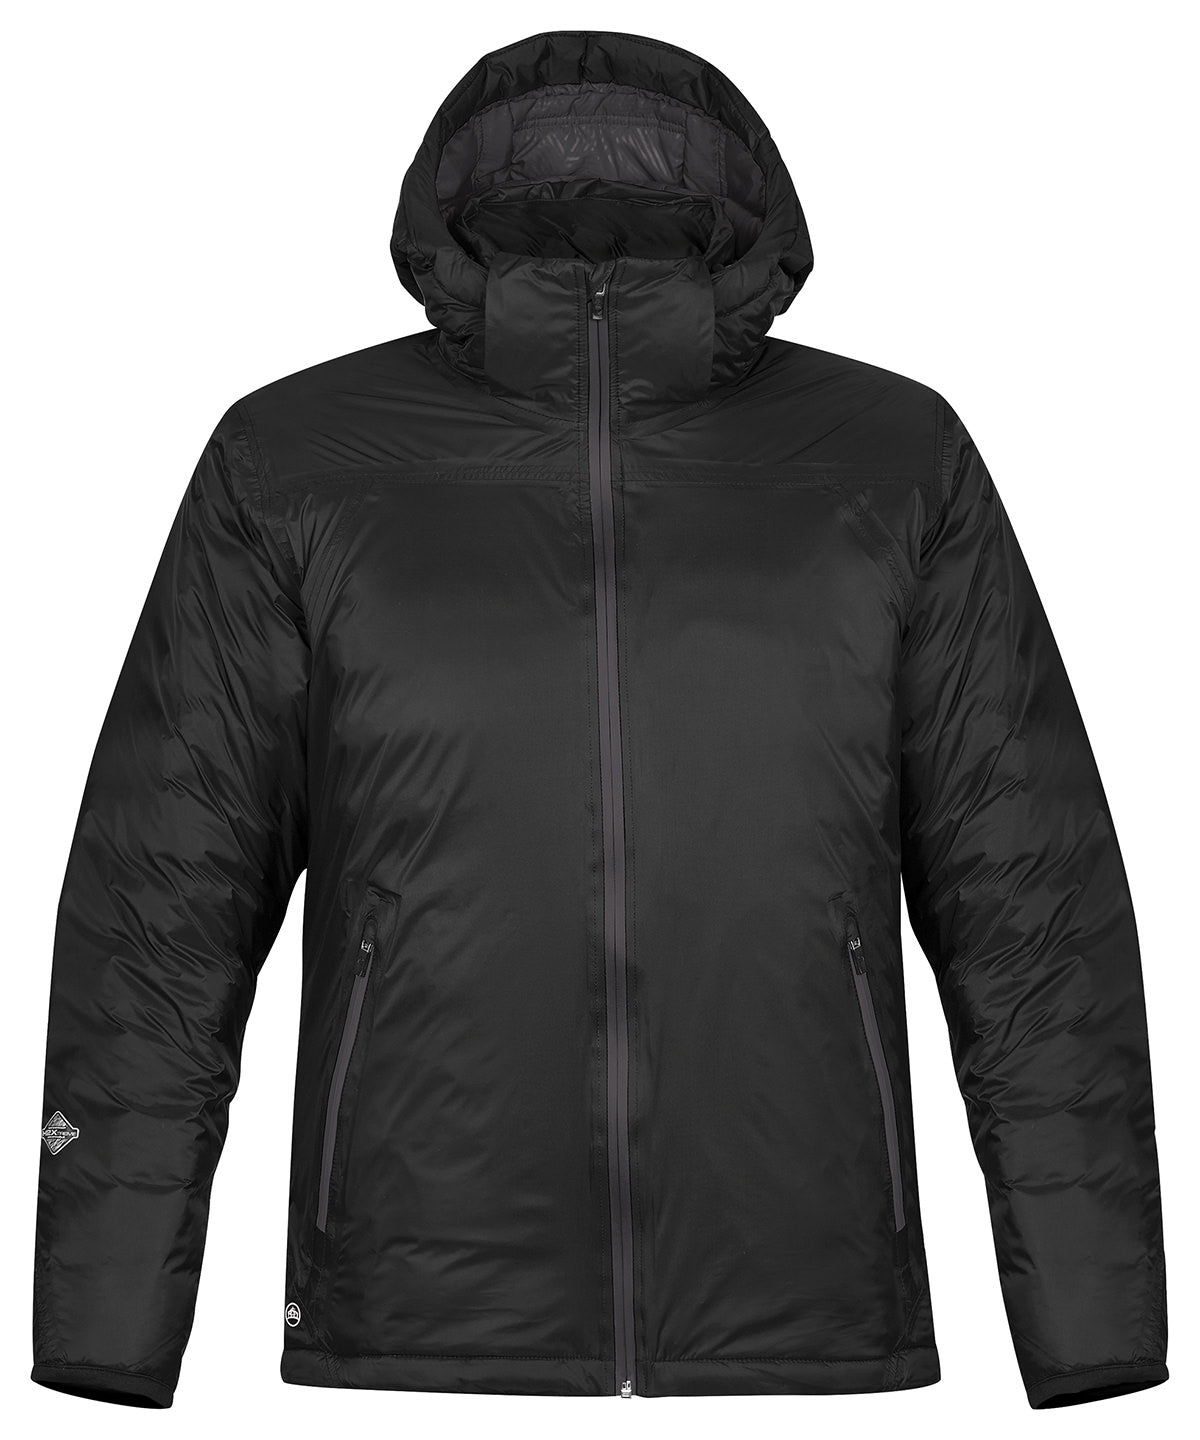 Black ice thermal jacket